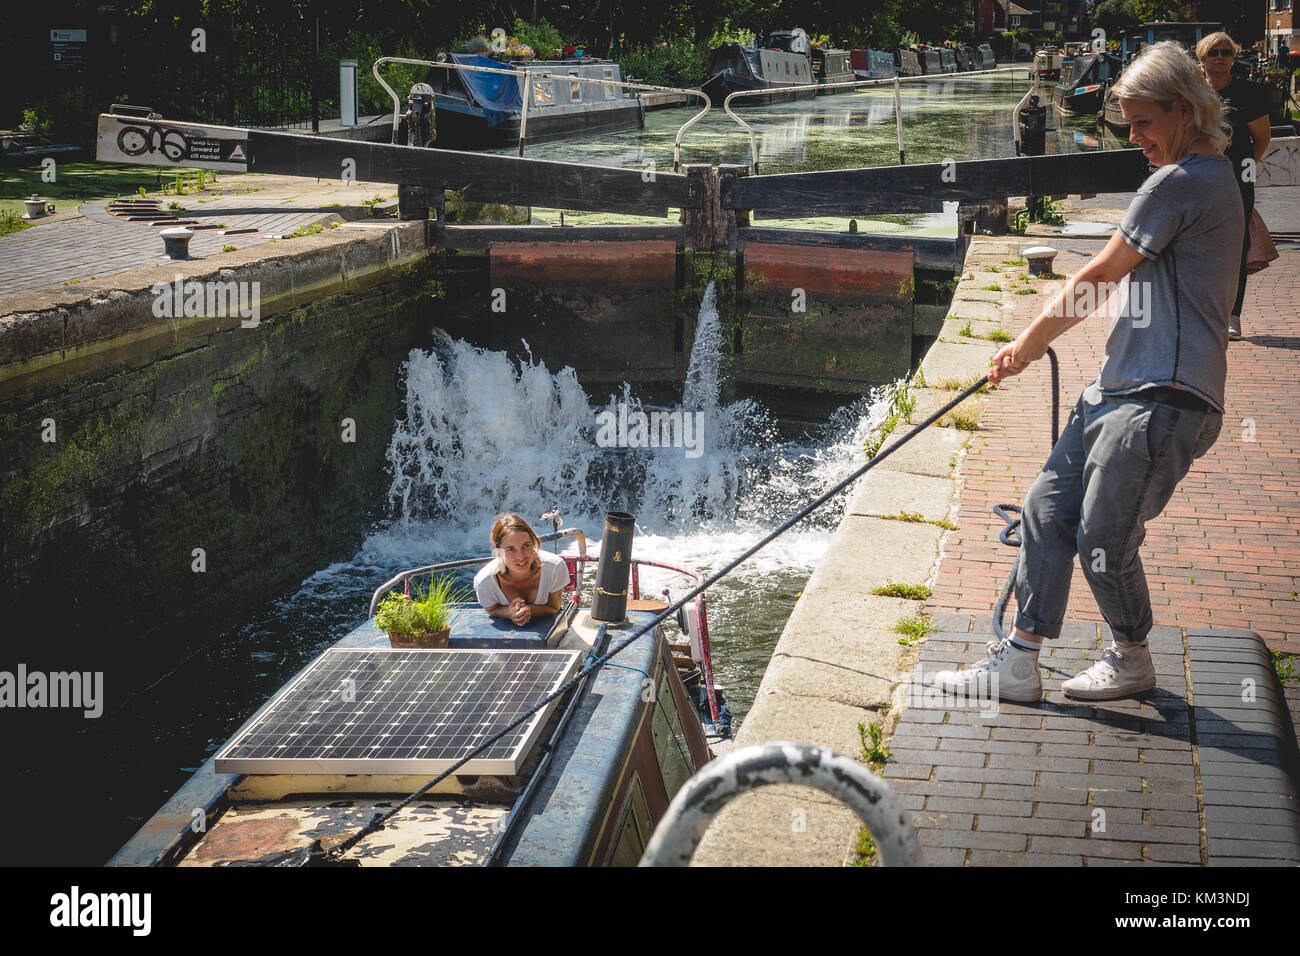 Narrow boat in a lock along Regent's Canal in East London (UK). August 2017. Landscape format. Stock Photo